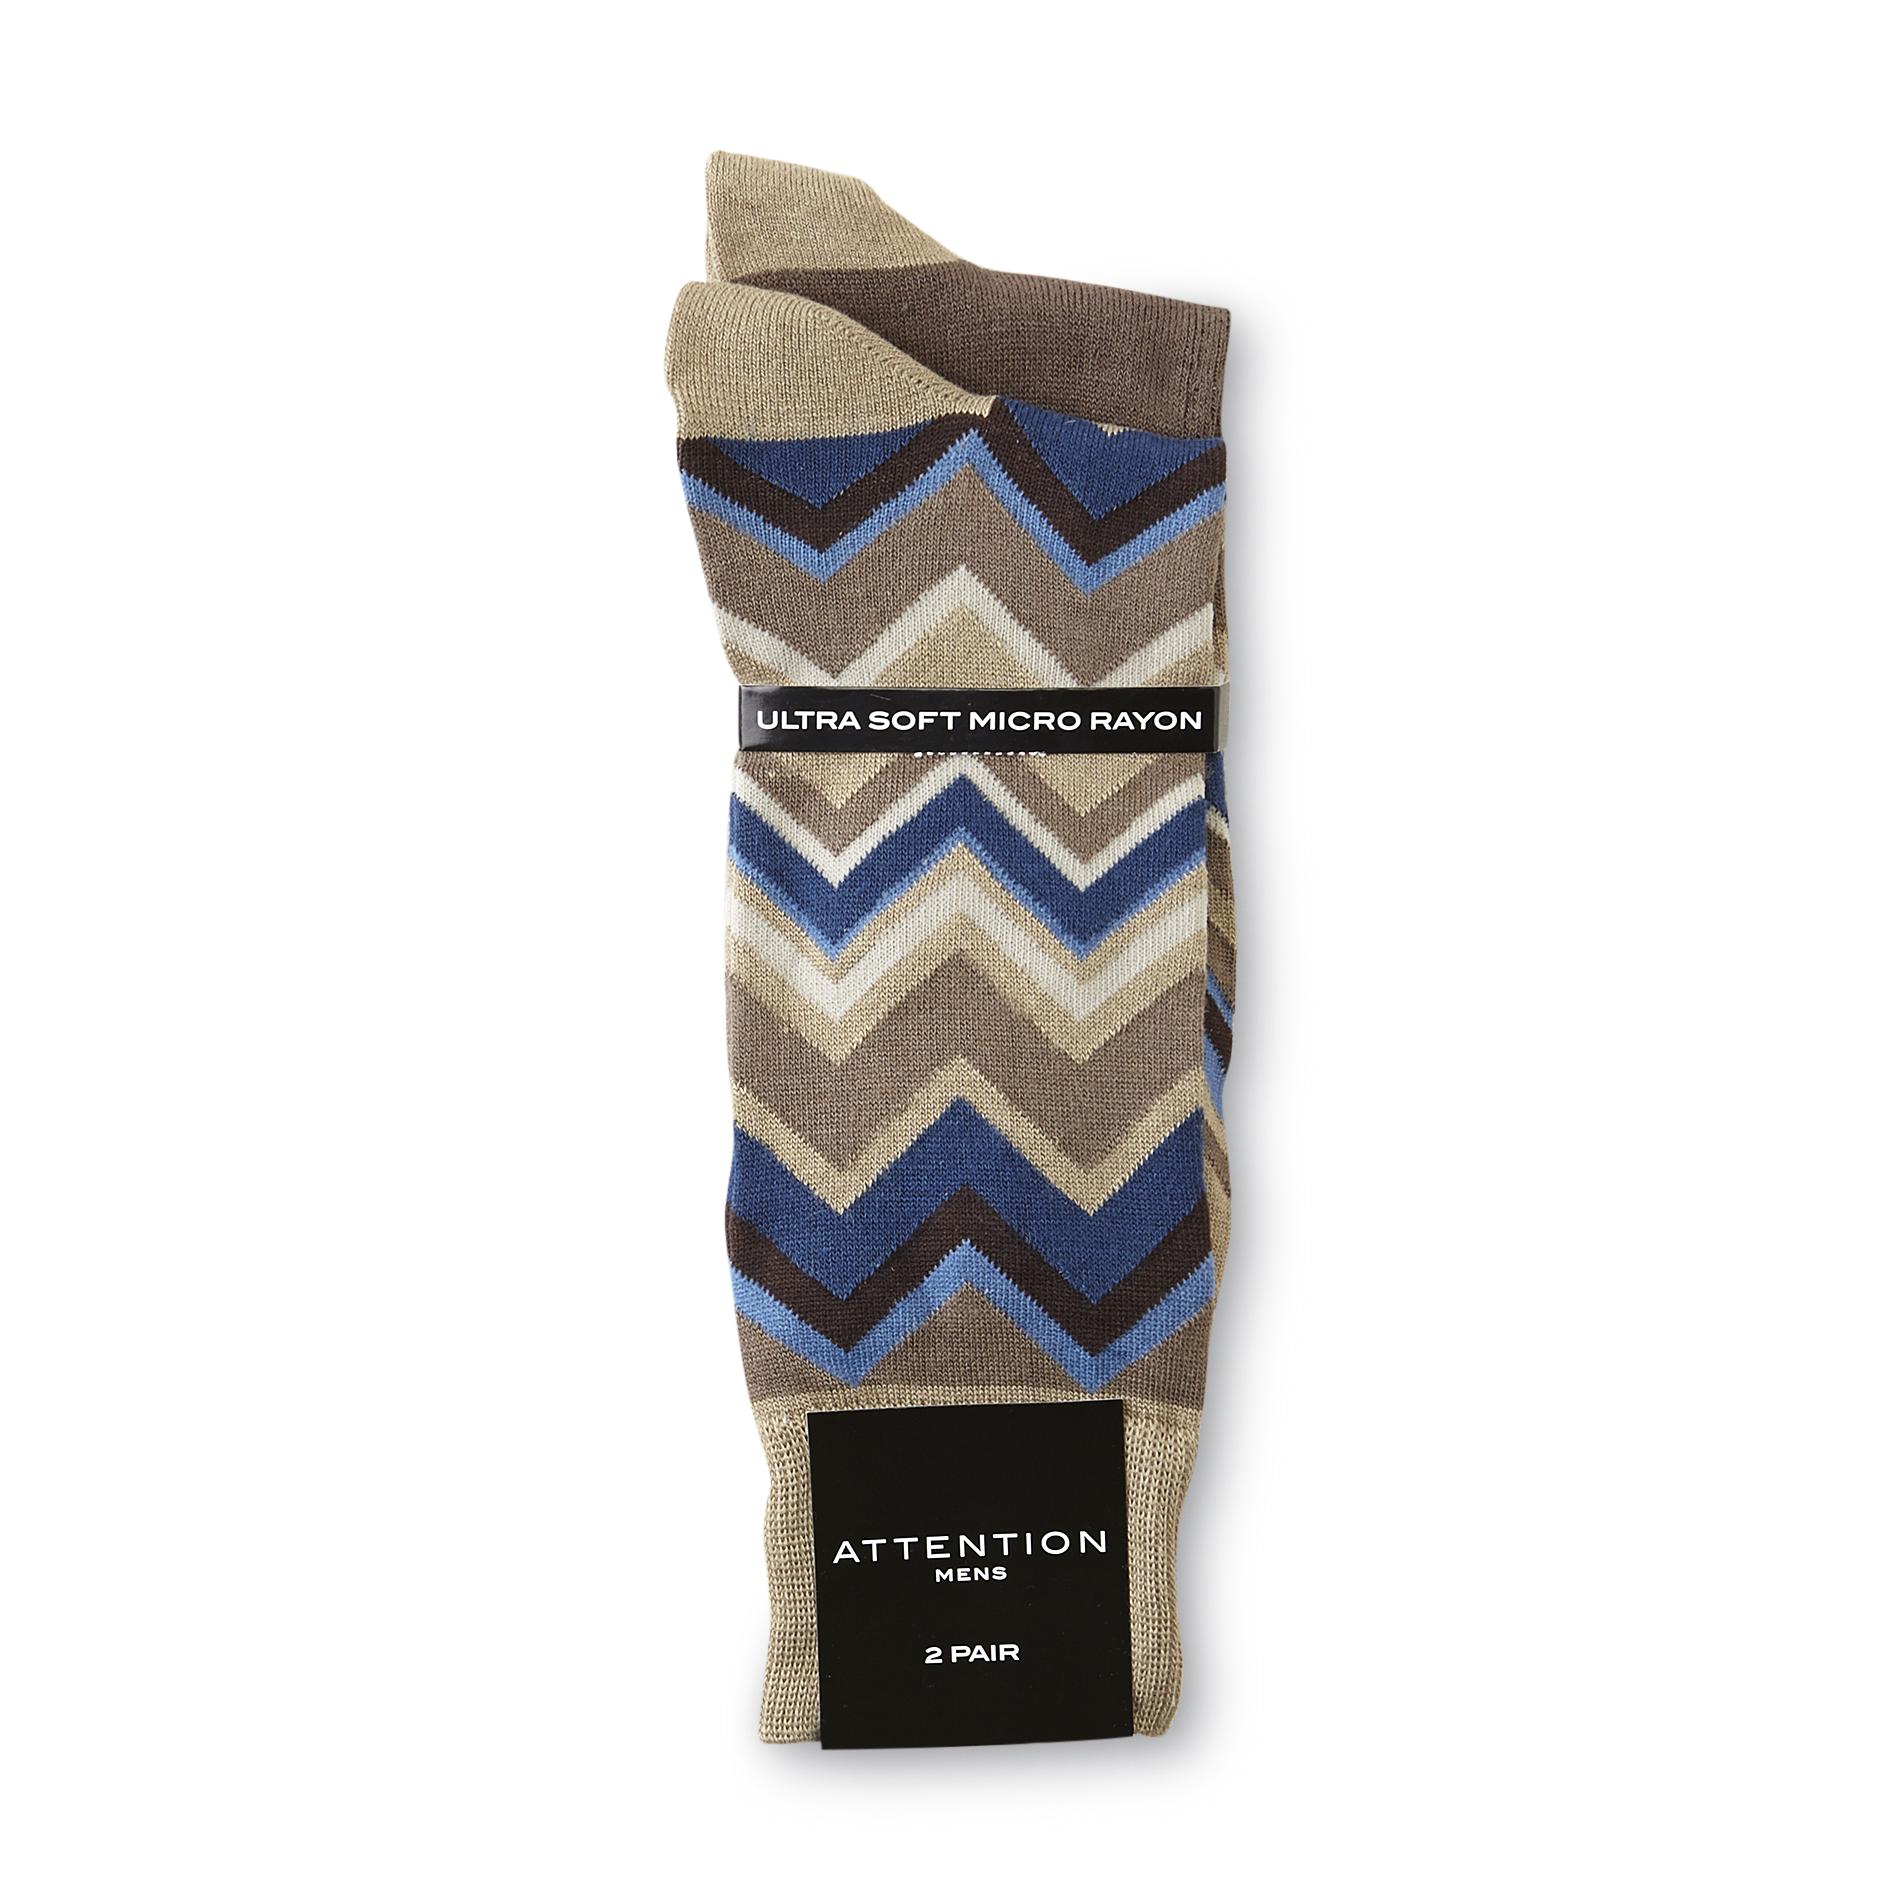 Attention Men's 2-Pairs Dress Socks - Zigzag & Colorblock